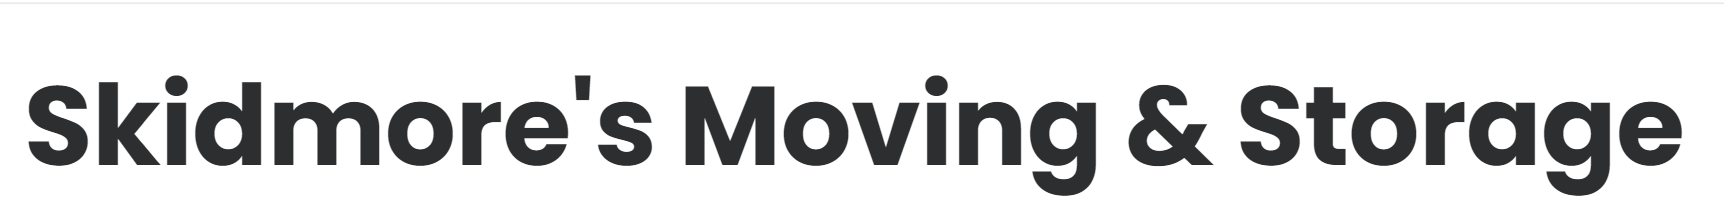 Skidmore's Moving & Storage company logo